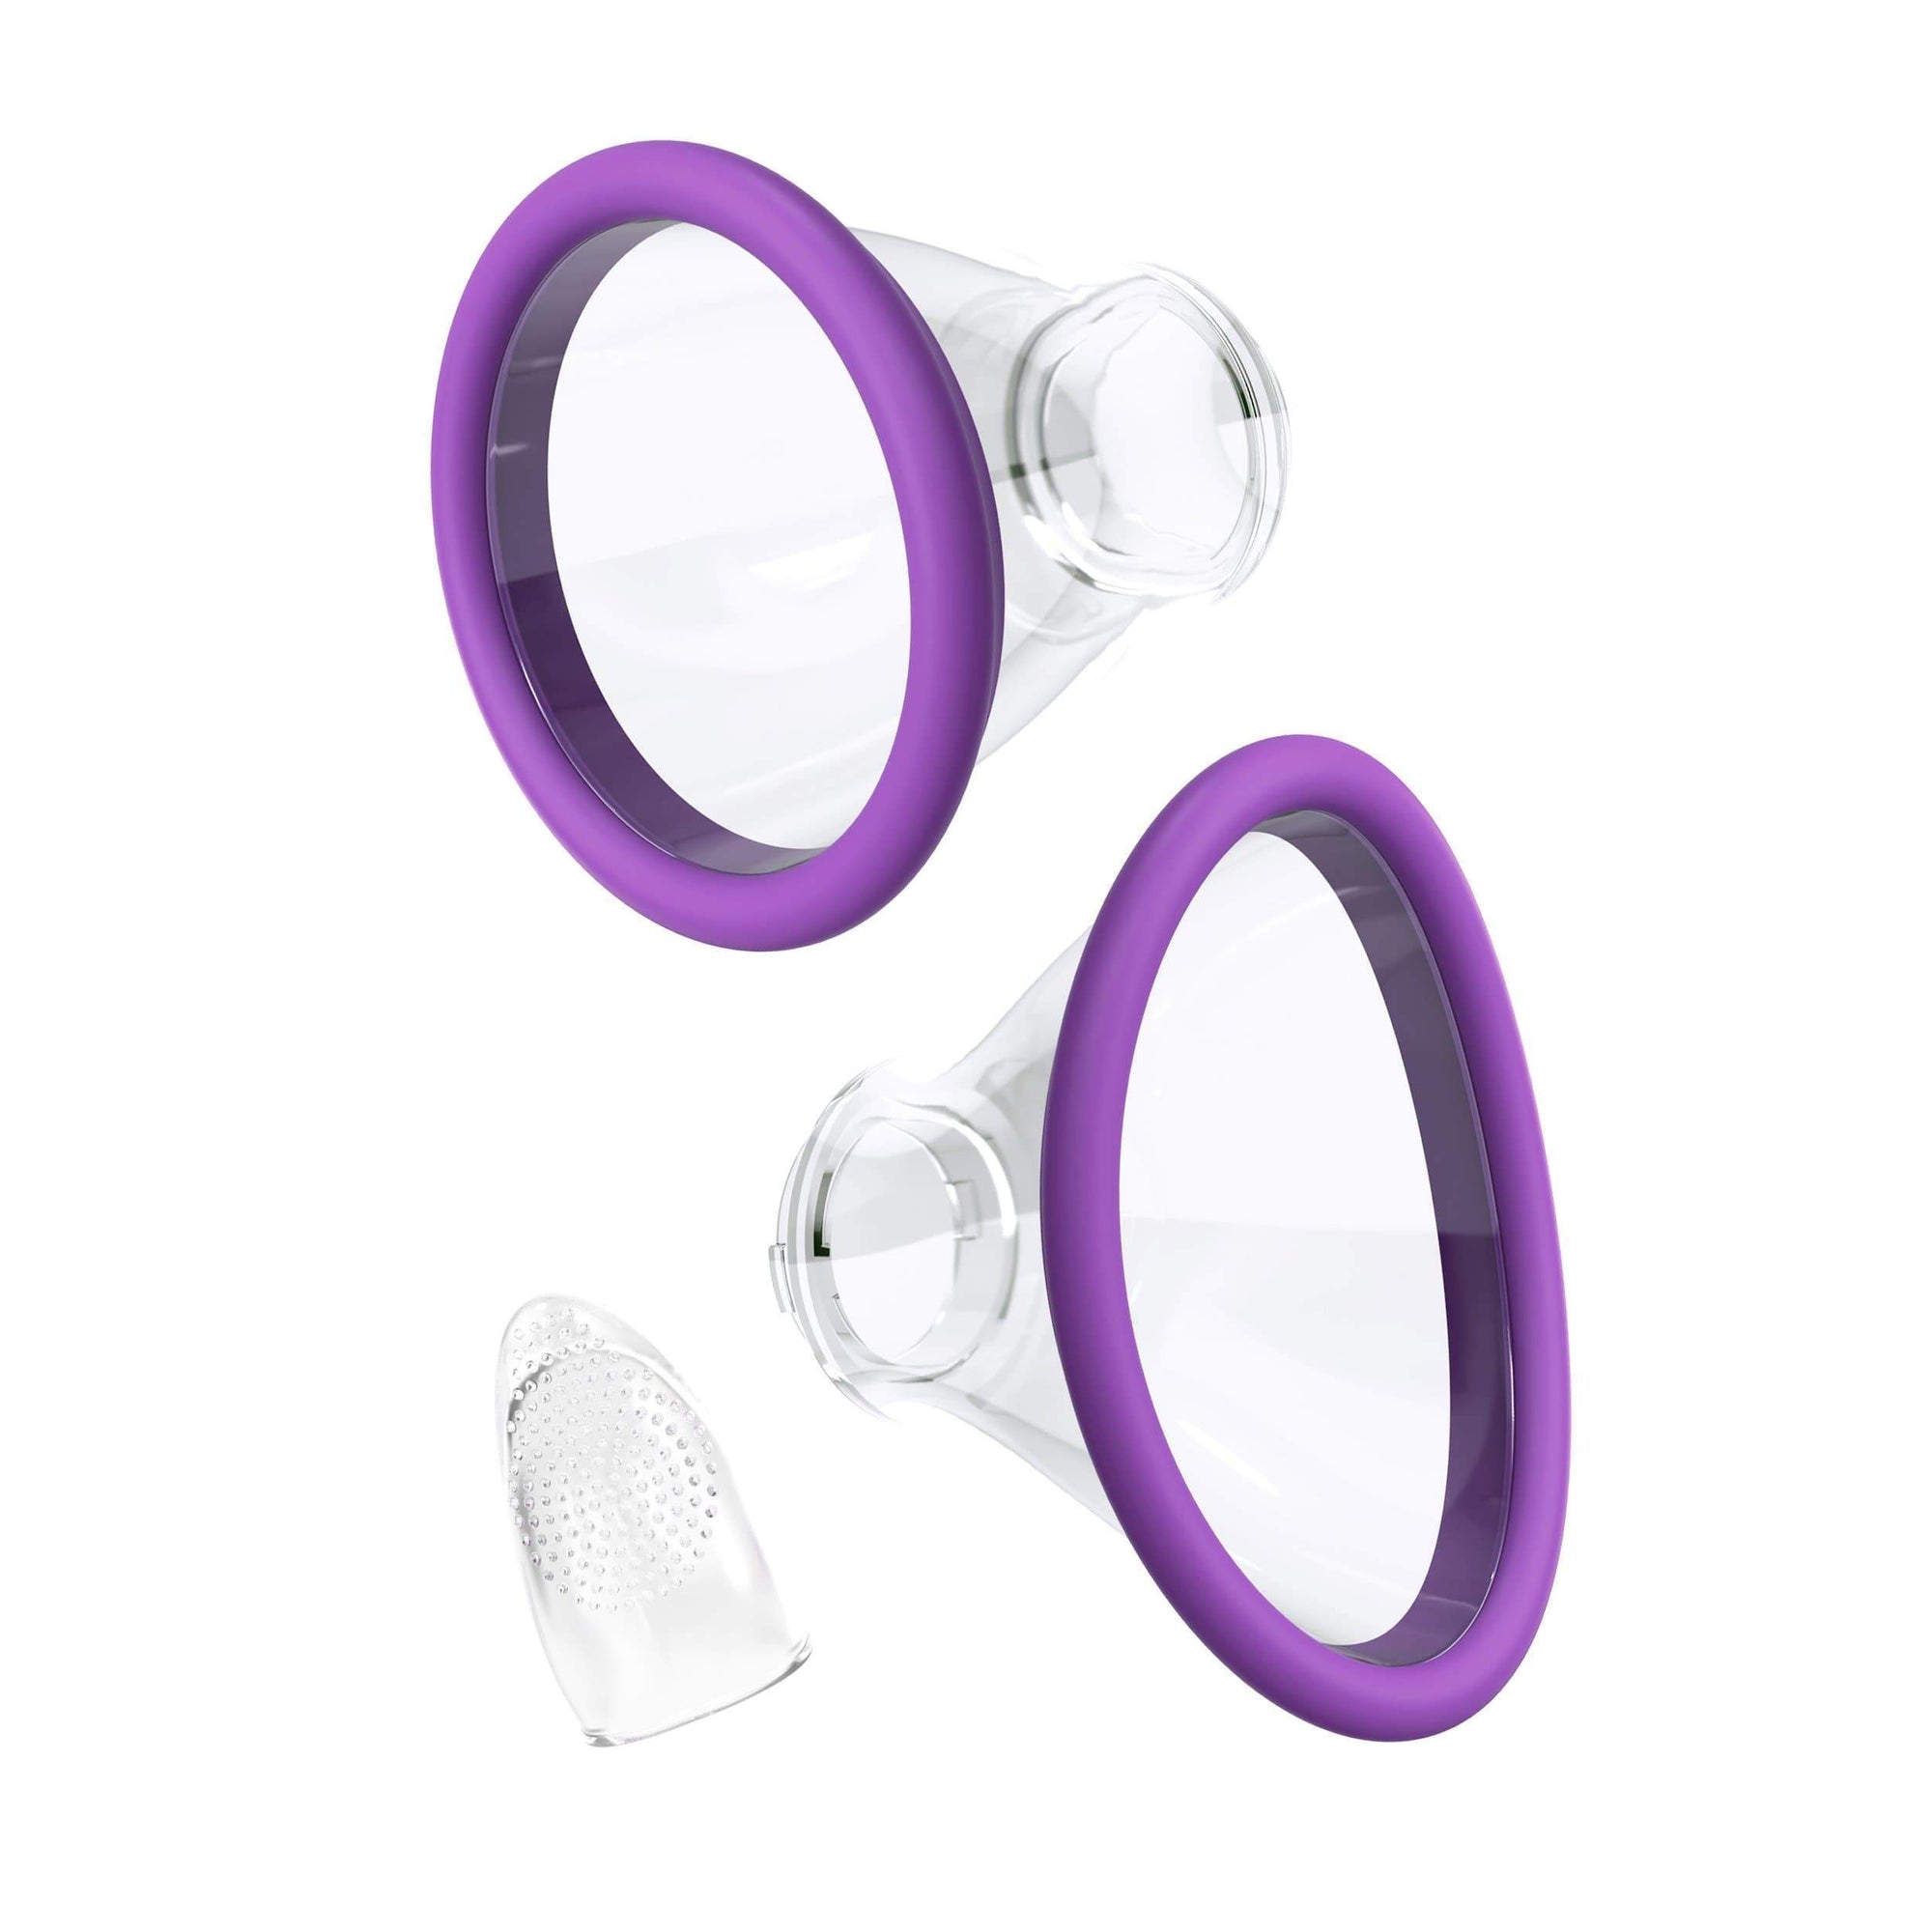 Pipedream - Her Ultimate Pressure G Spot Vibrator (Purple) G Spot Dildo (Vibration) Rechargeable